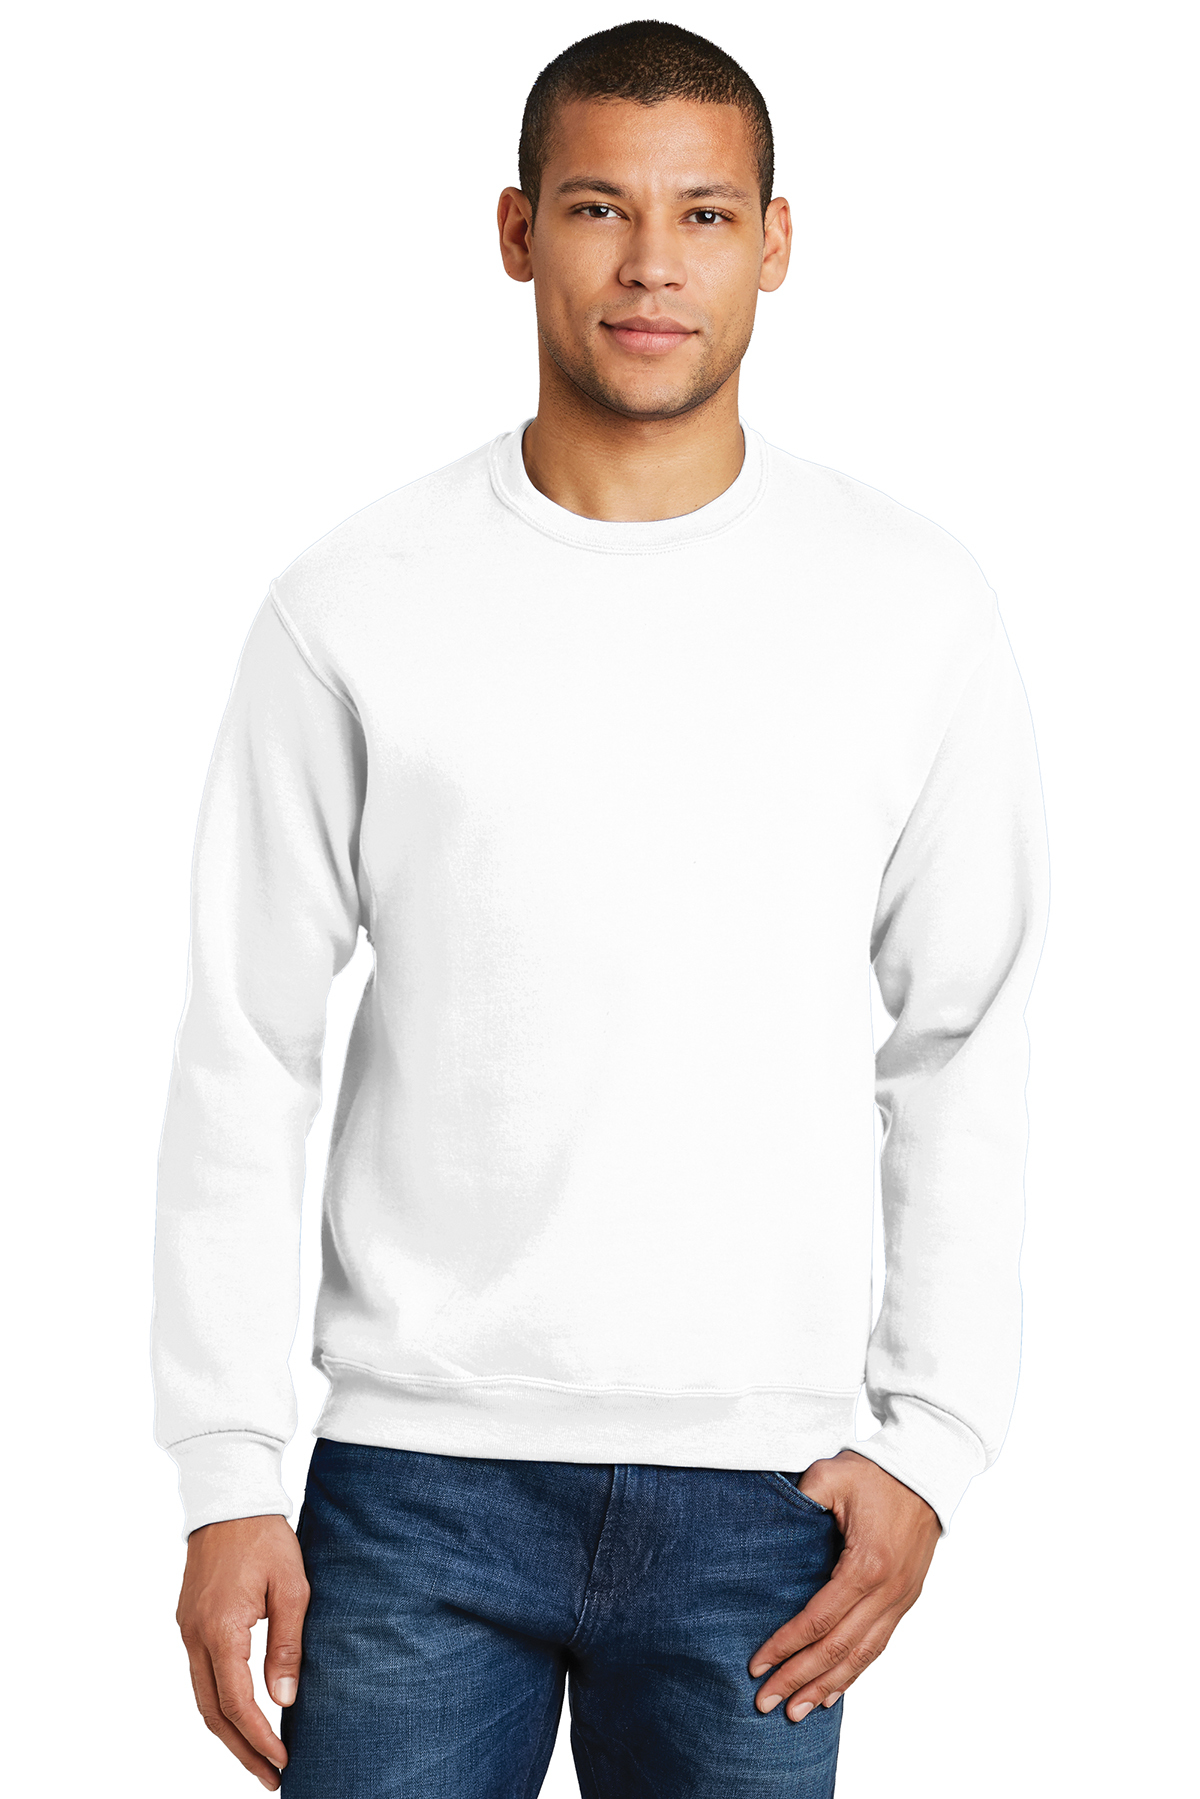 Jerzees - NuBlend Crewneck Sweatshirt | Product | SanMar